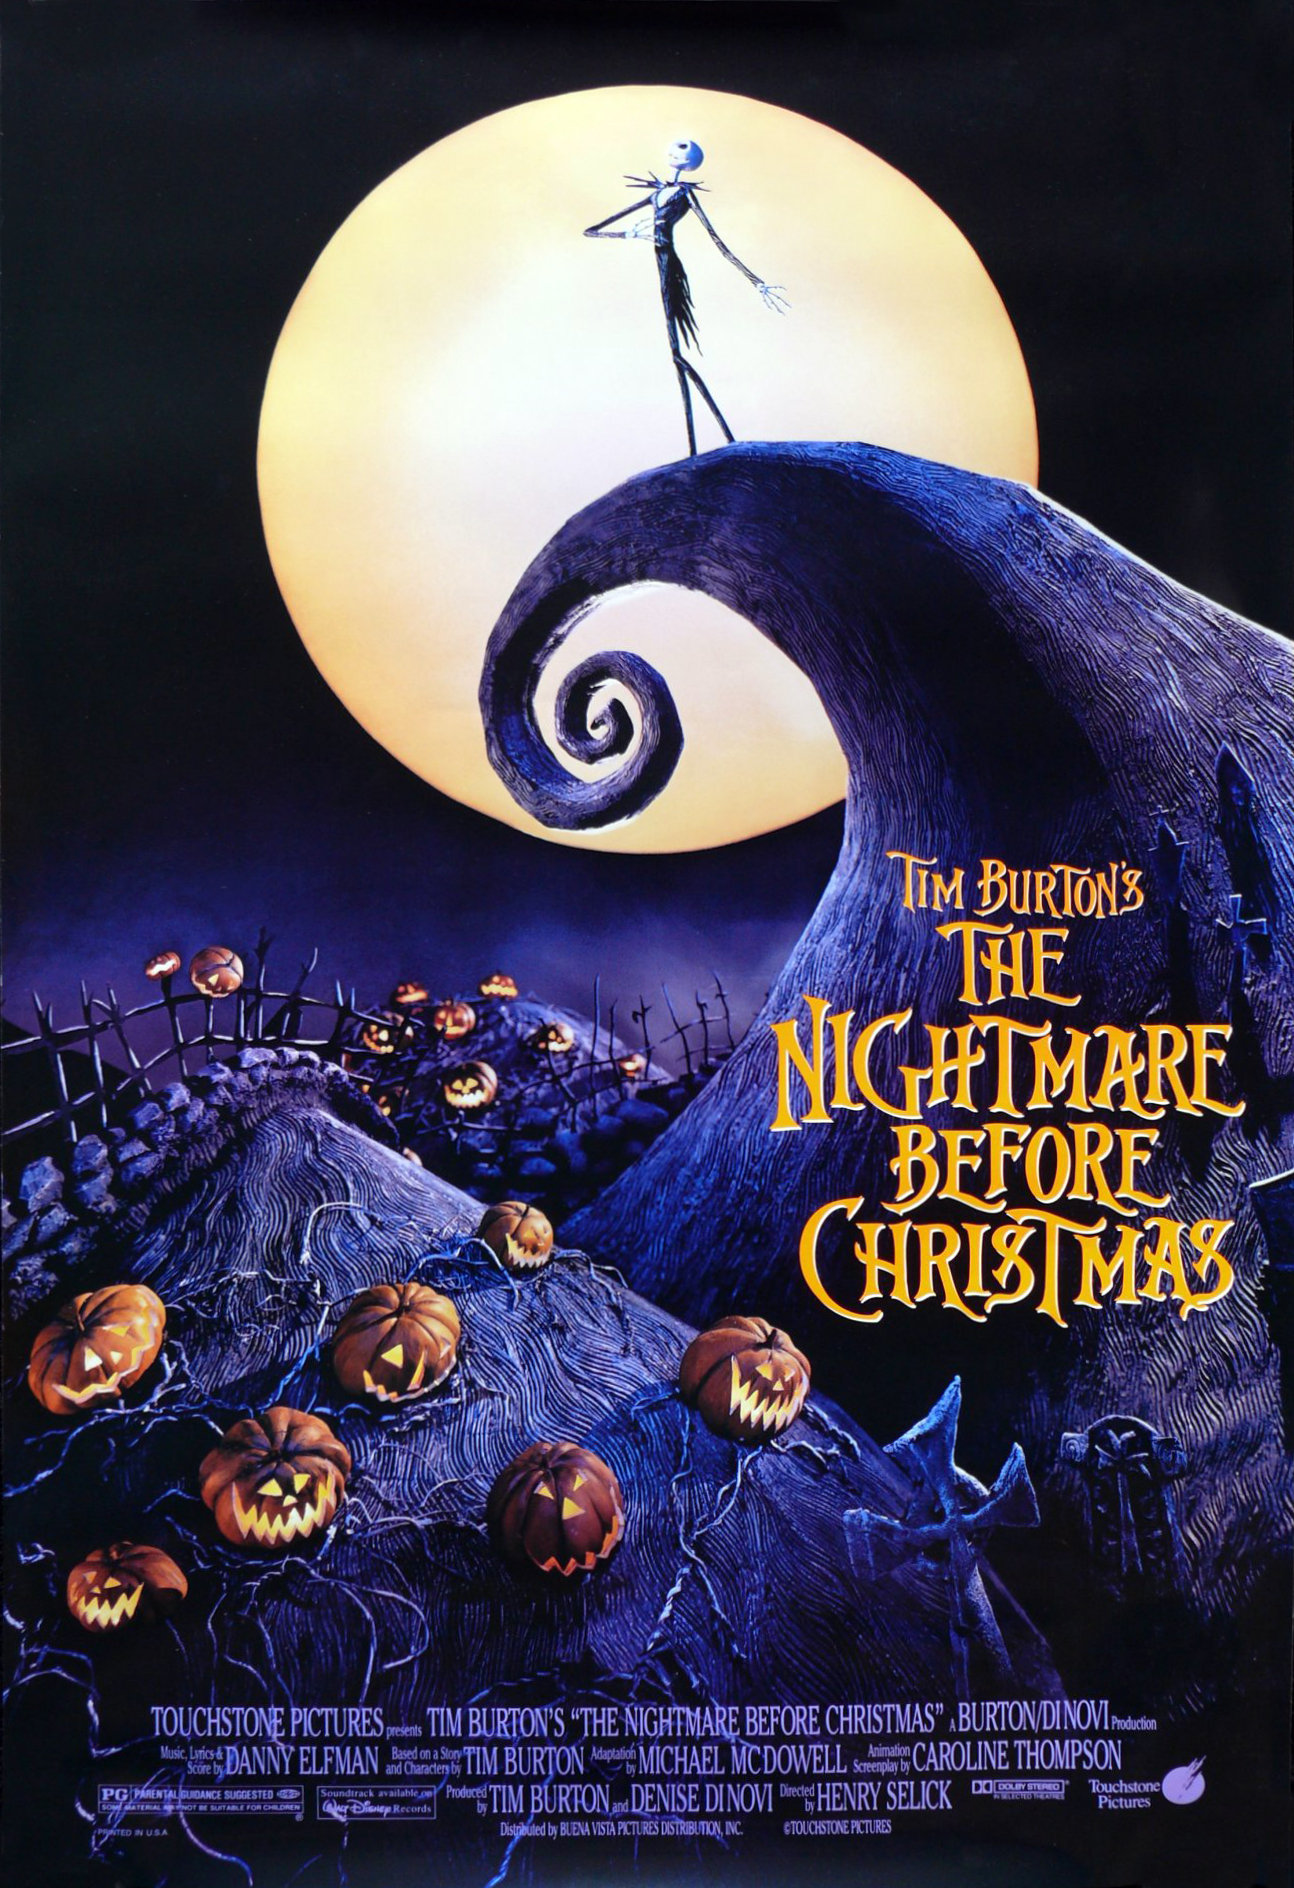 The Nightmare Before Christmas - Tim Burton Wiki